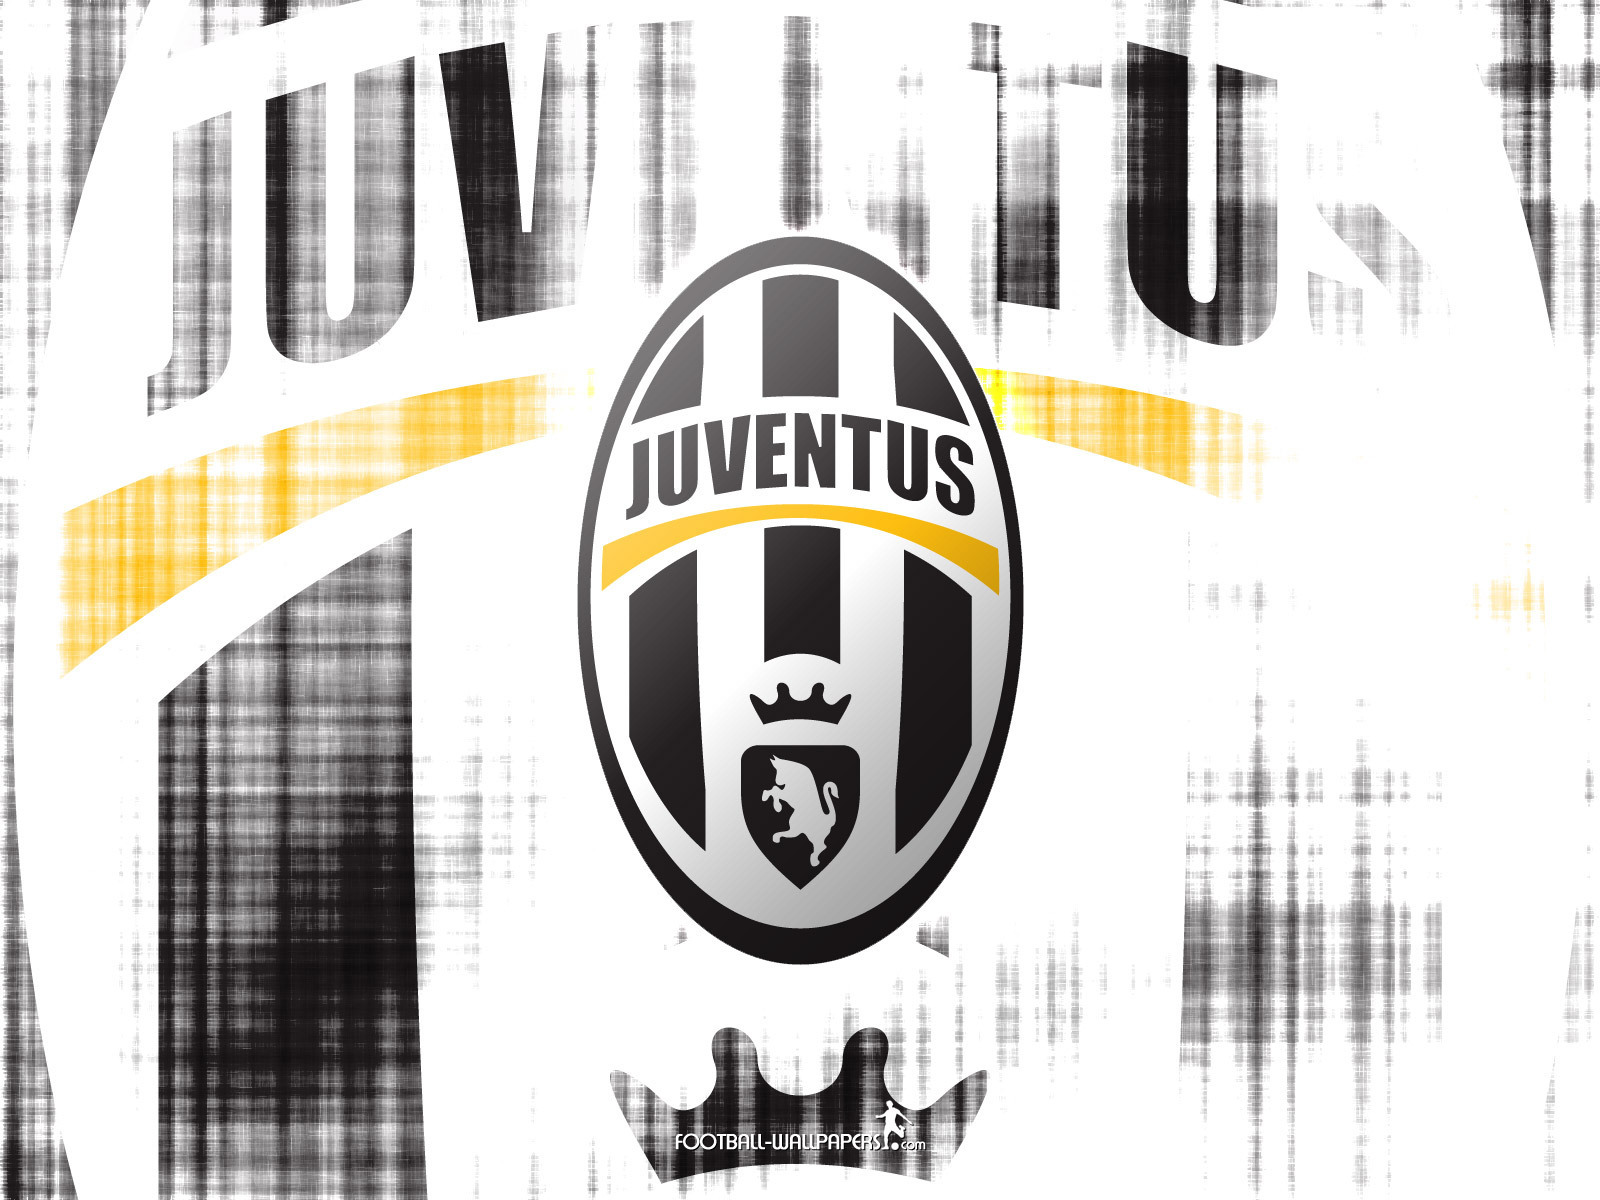 Juventus Image HD Wallpaper And Background Photos